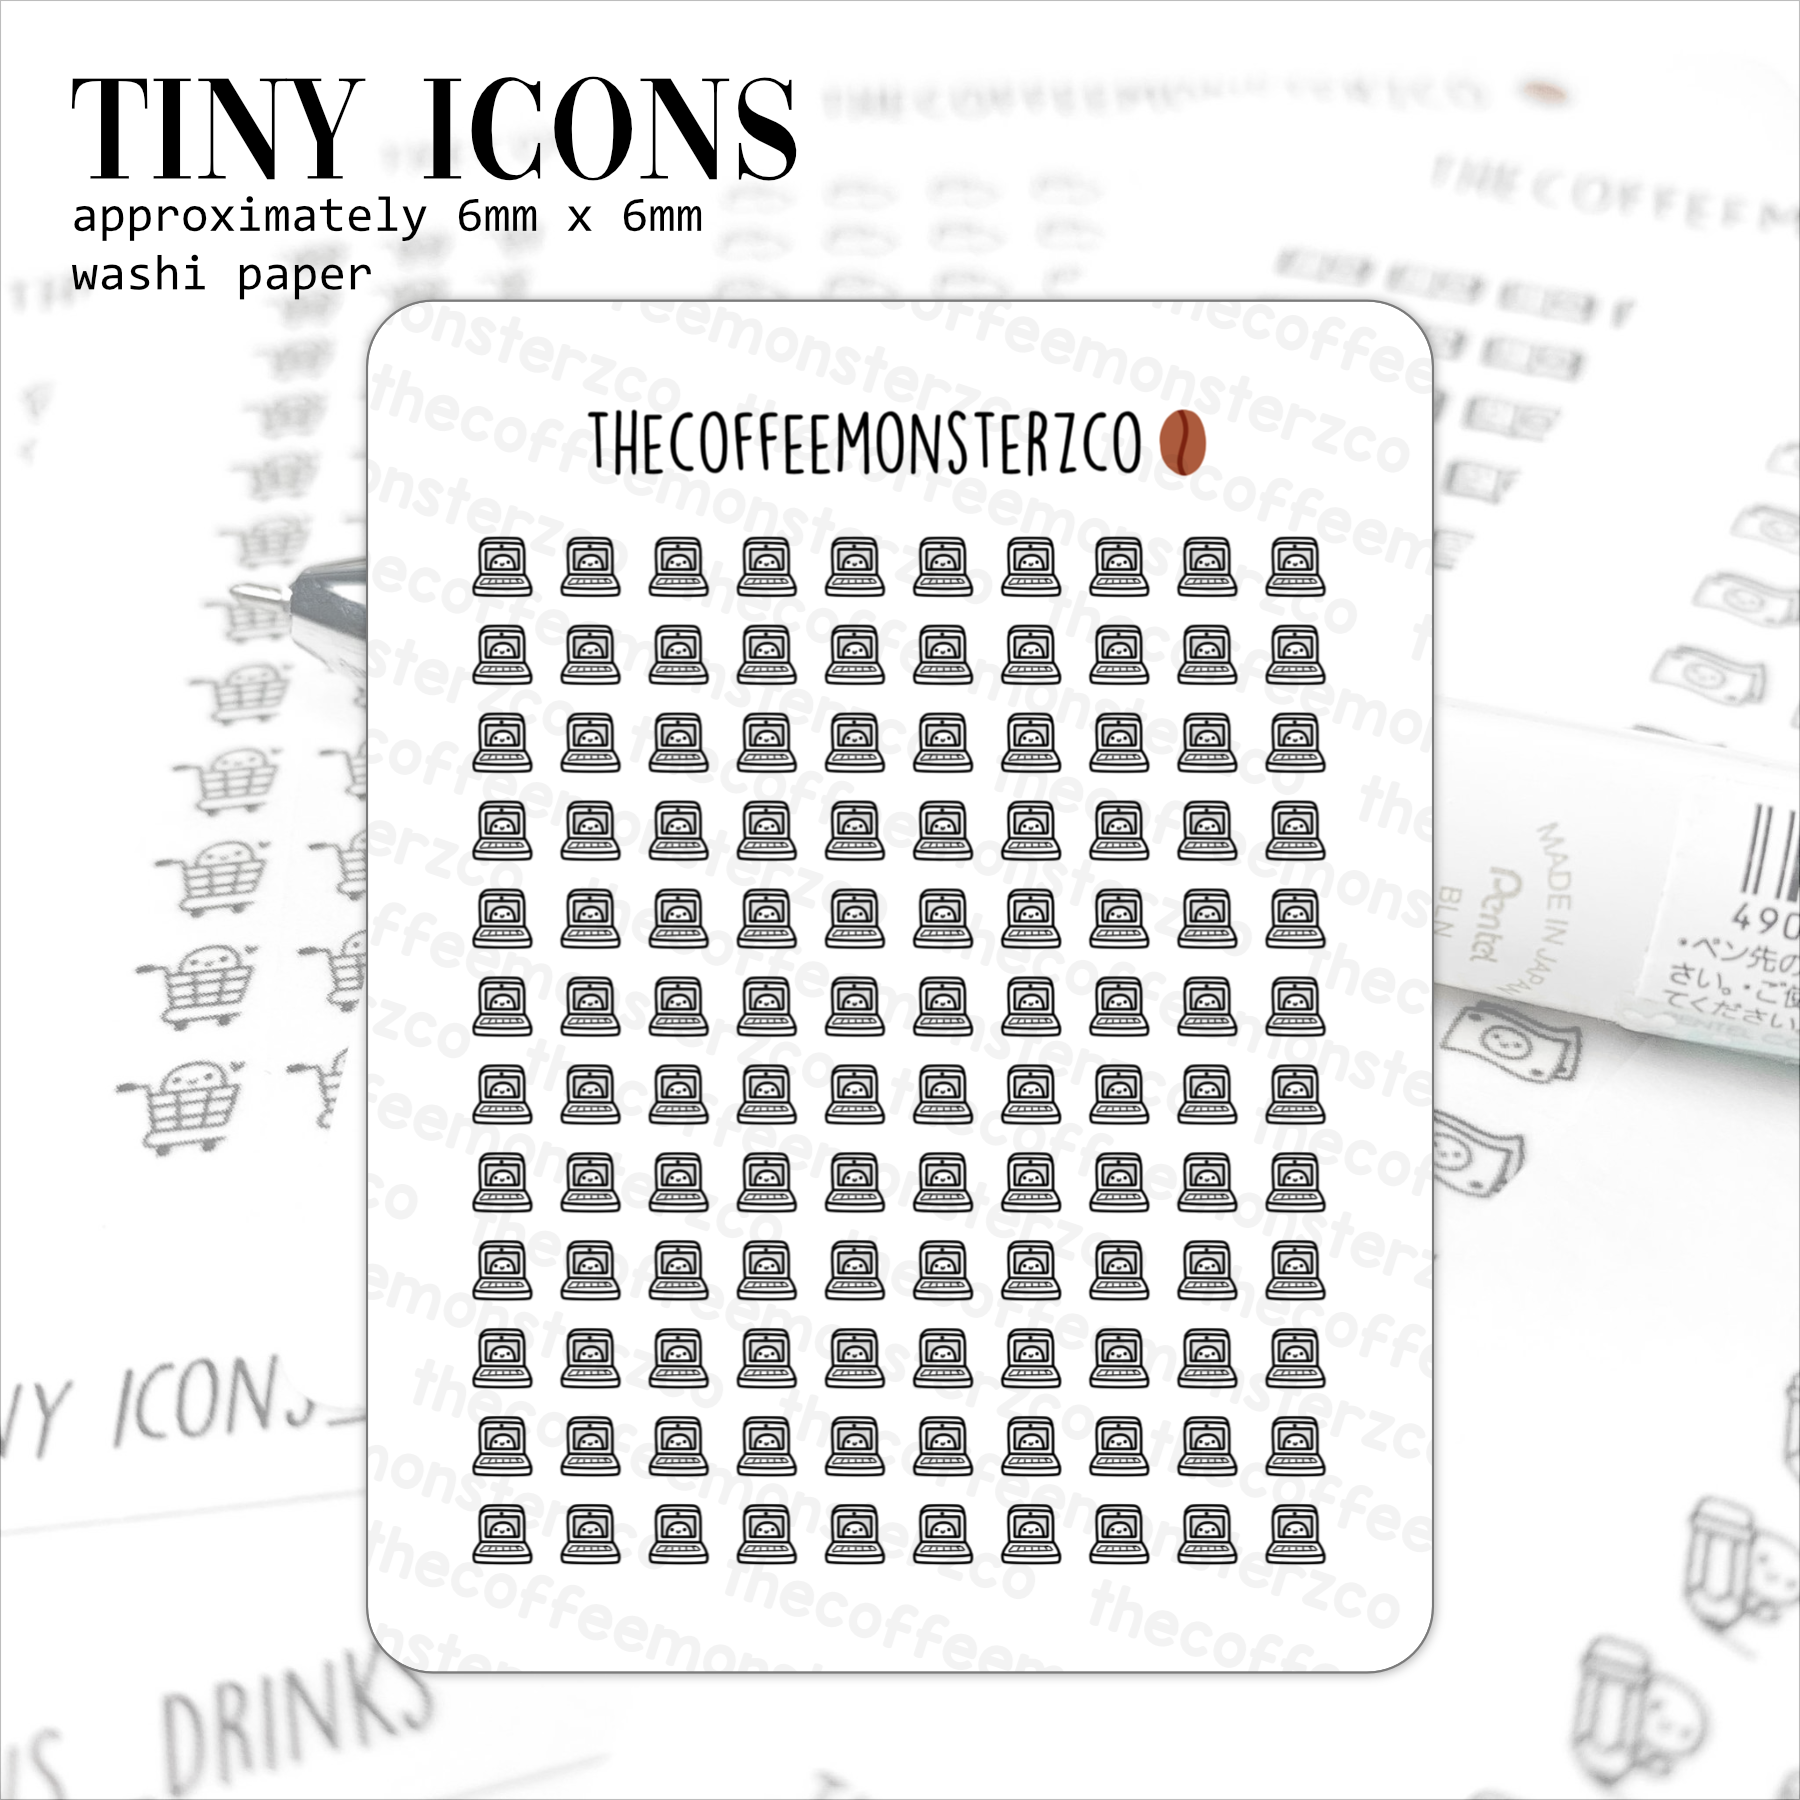 Tiny Icons (washi paper)